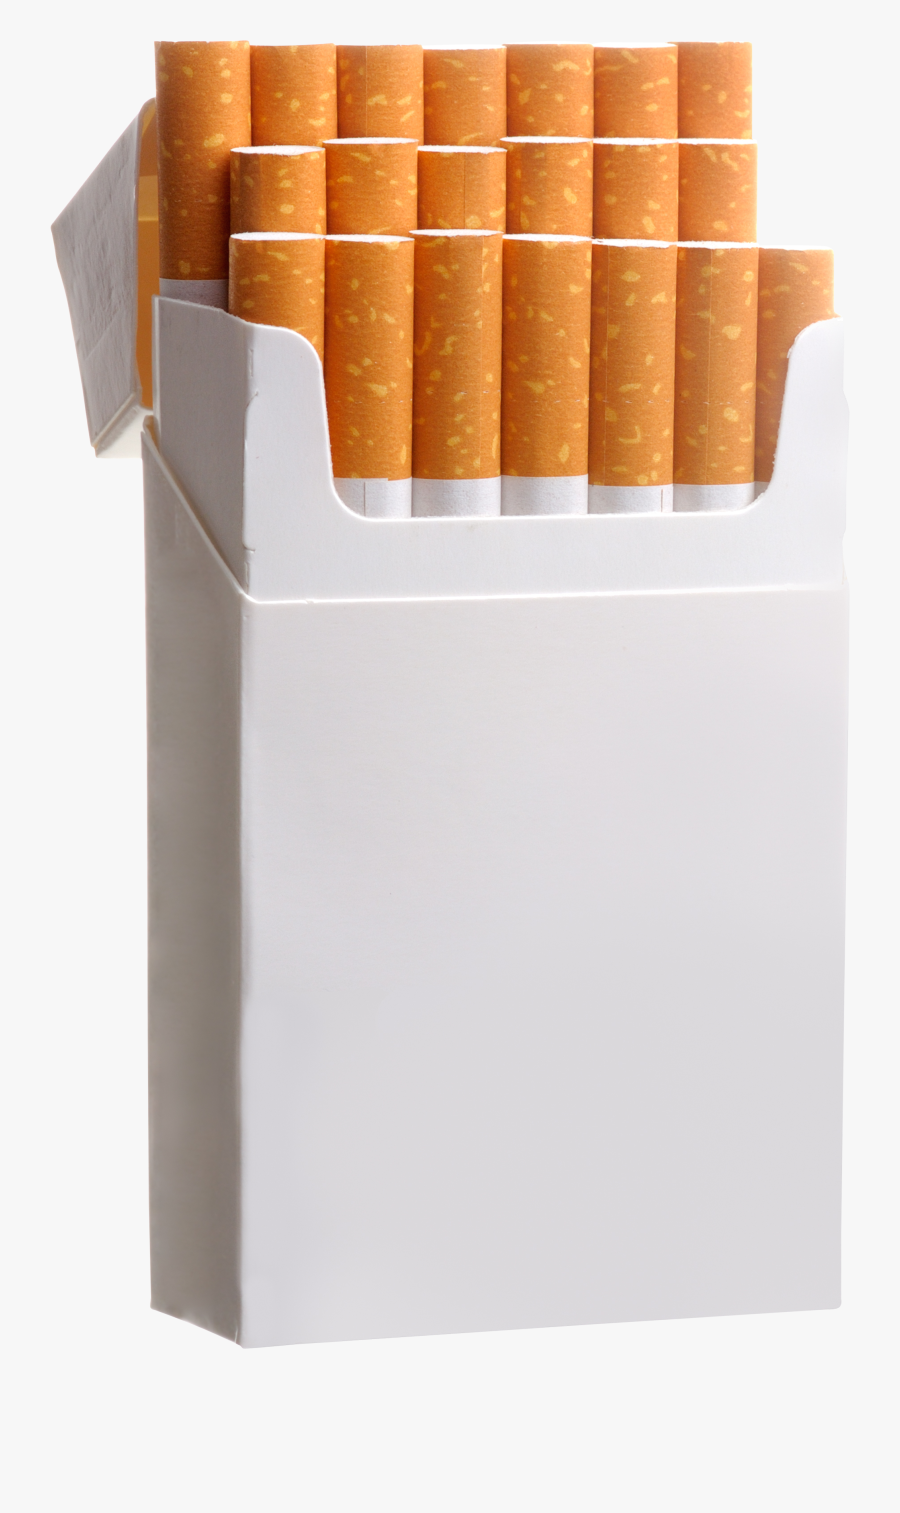 Cigarette Pack Png Image - Cigarette Pack Png, Transparent Clipart